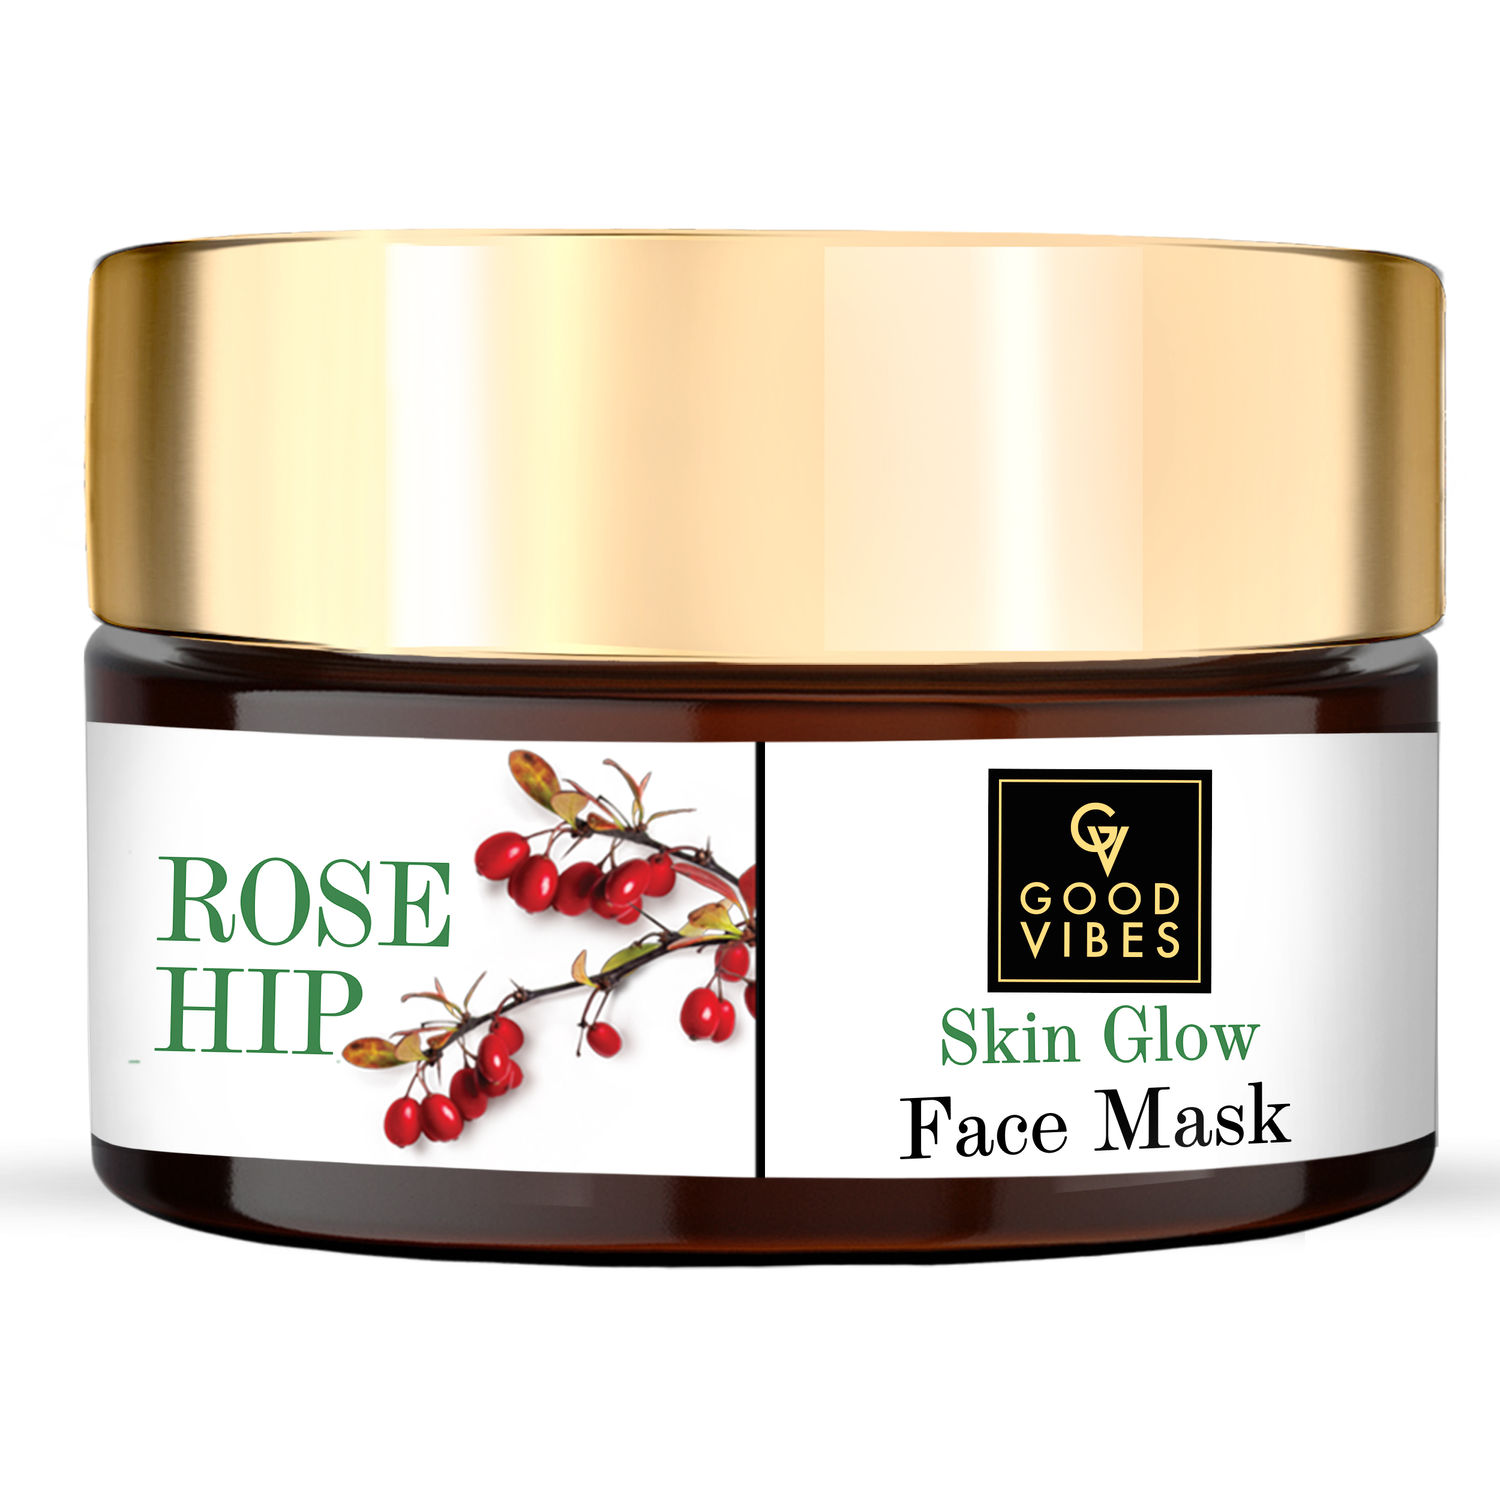 Good Vibes Skin Glow Face Mask - Rosehip (100 g)